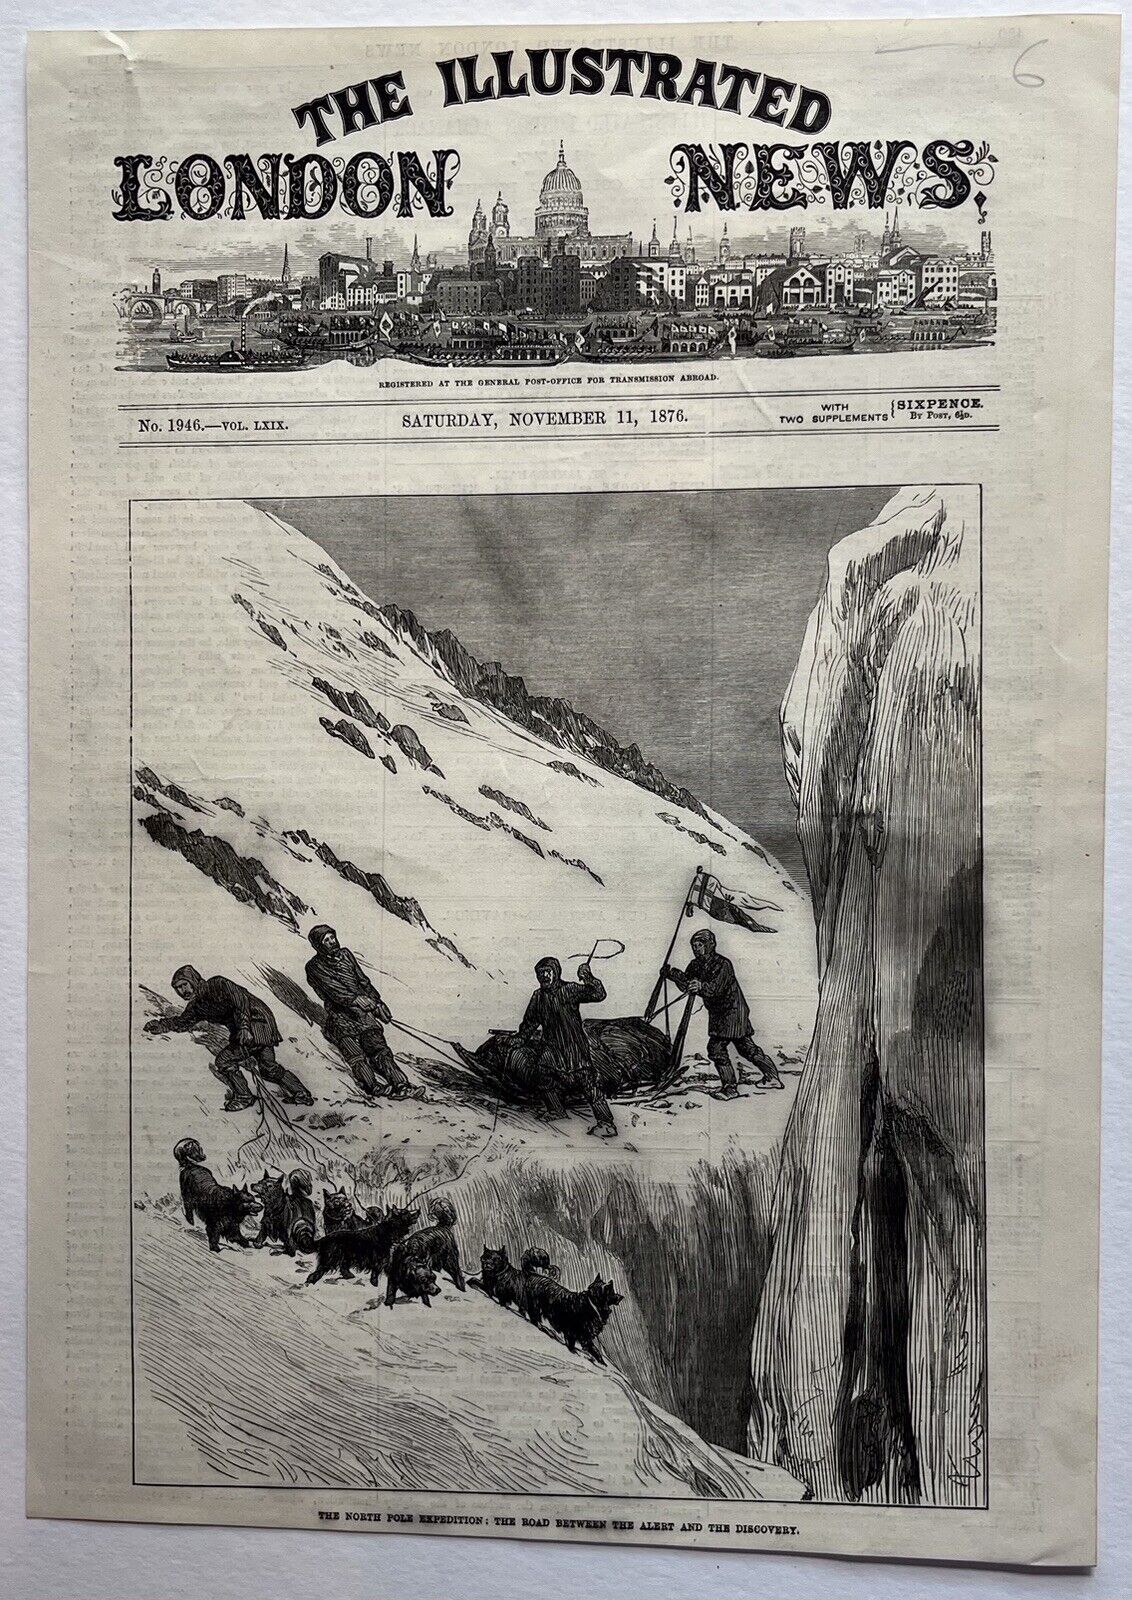 North Pole 1876 Expedition London News November 11, 1876 Original Print